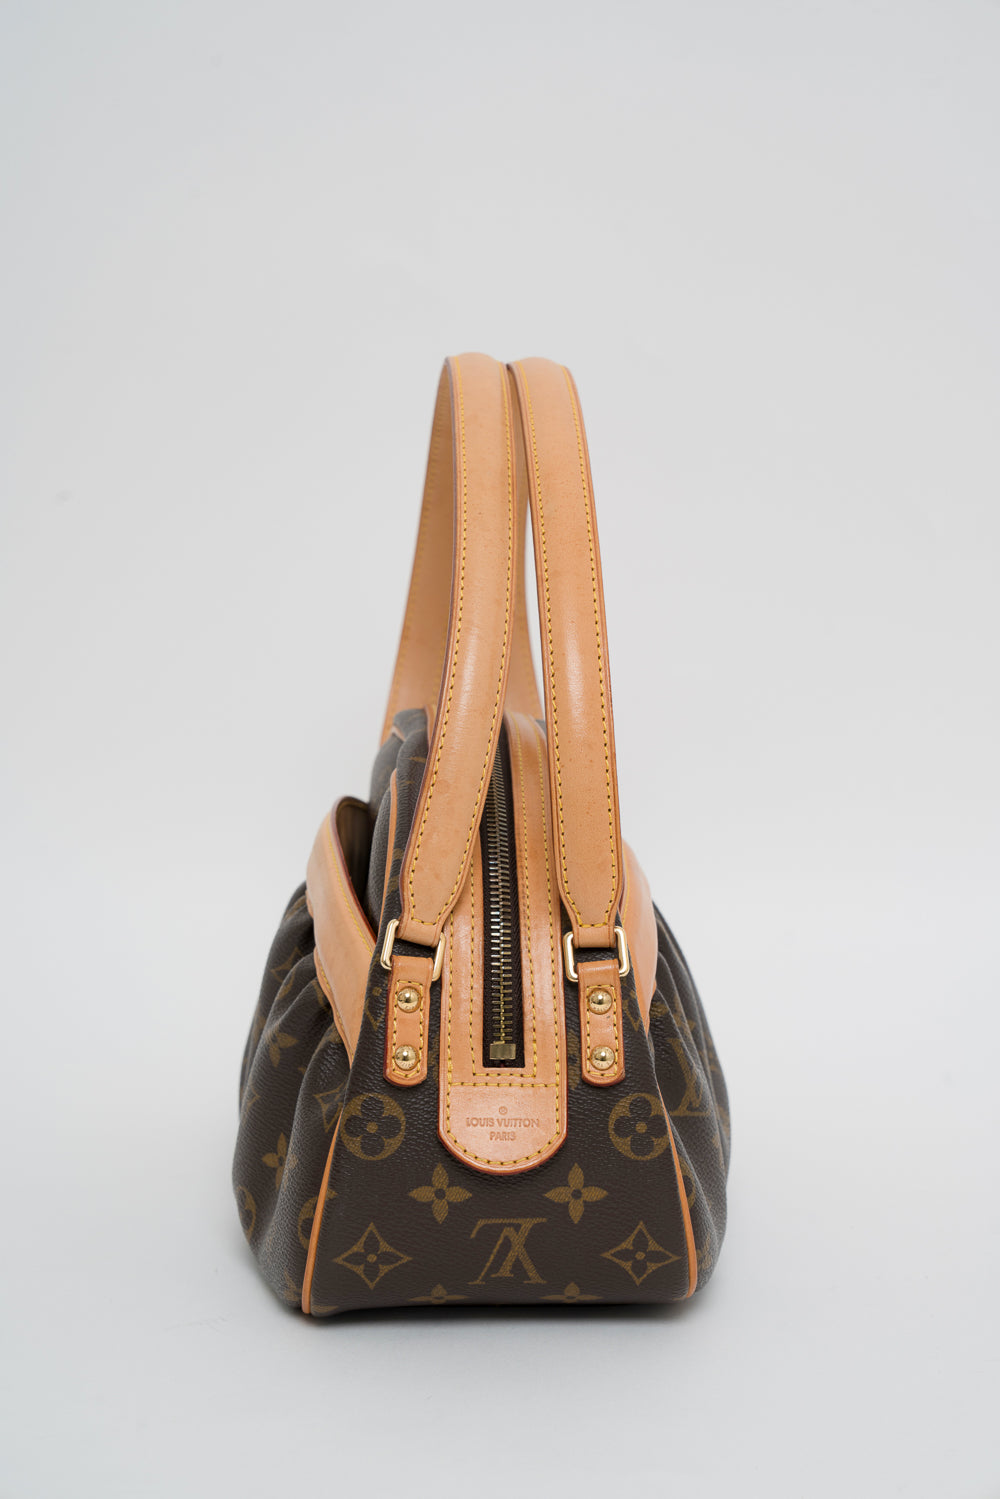 Louis Vuitton 2006 pre-owned monogram Klara handbag - Louis